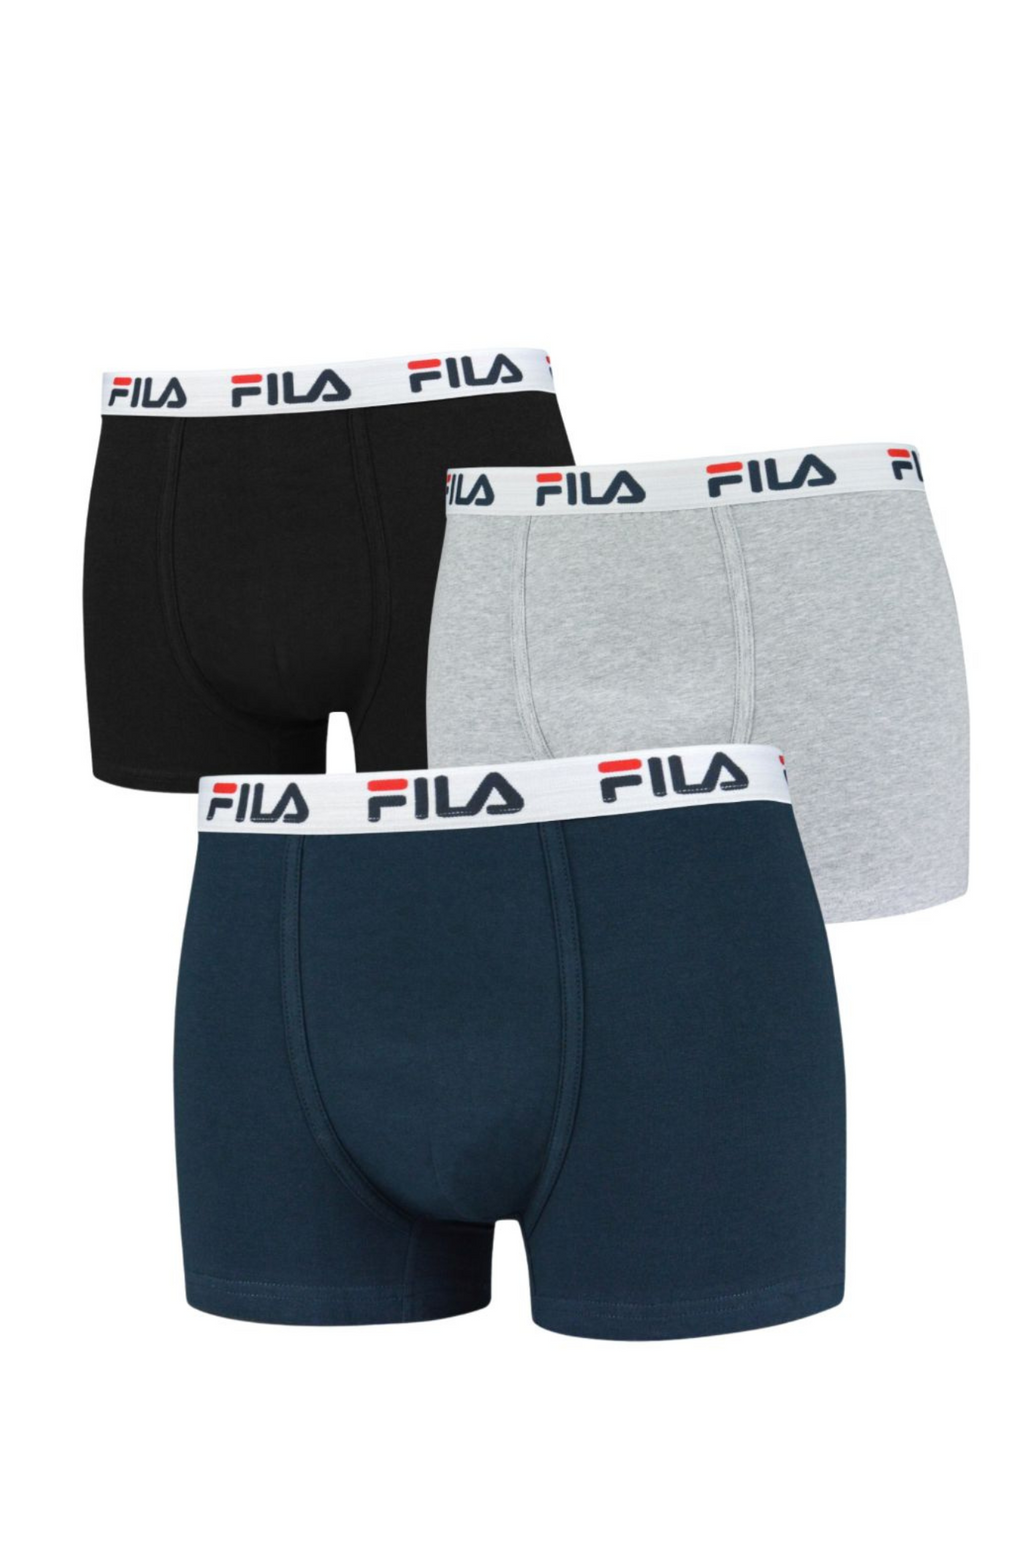 Fila Man Boxershorts Elastic mit Fila Logo 3 Pack Black Grey Navy